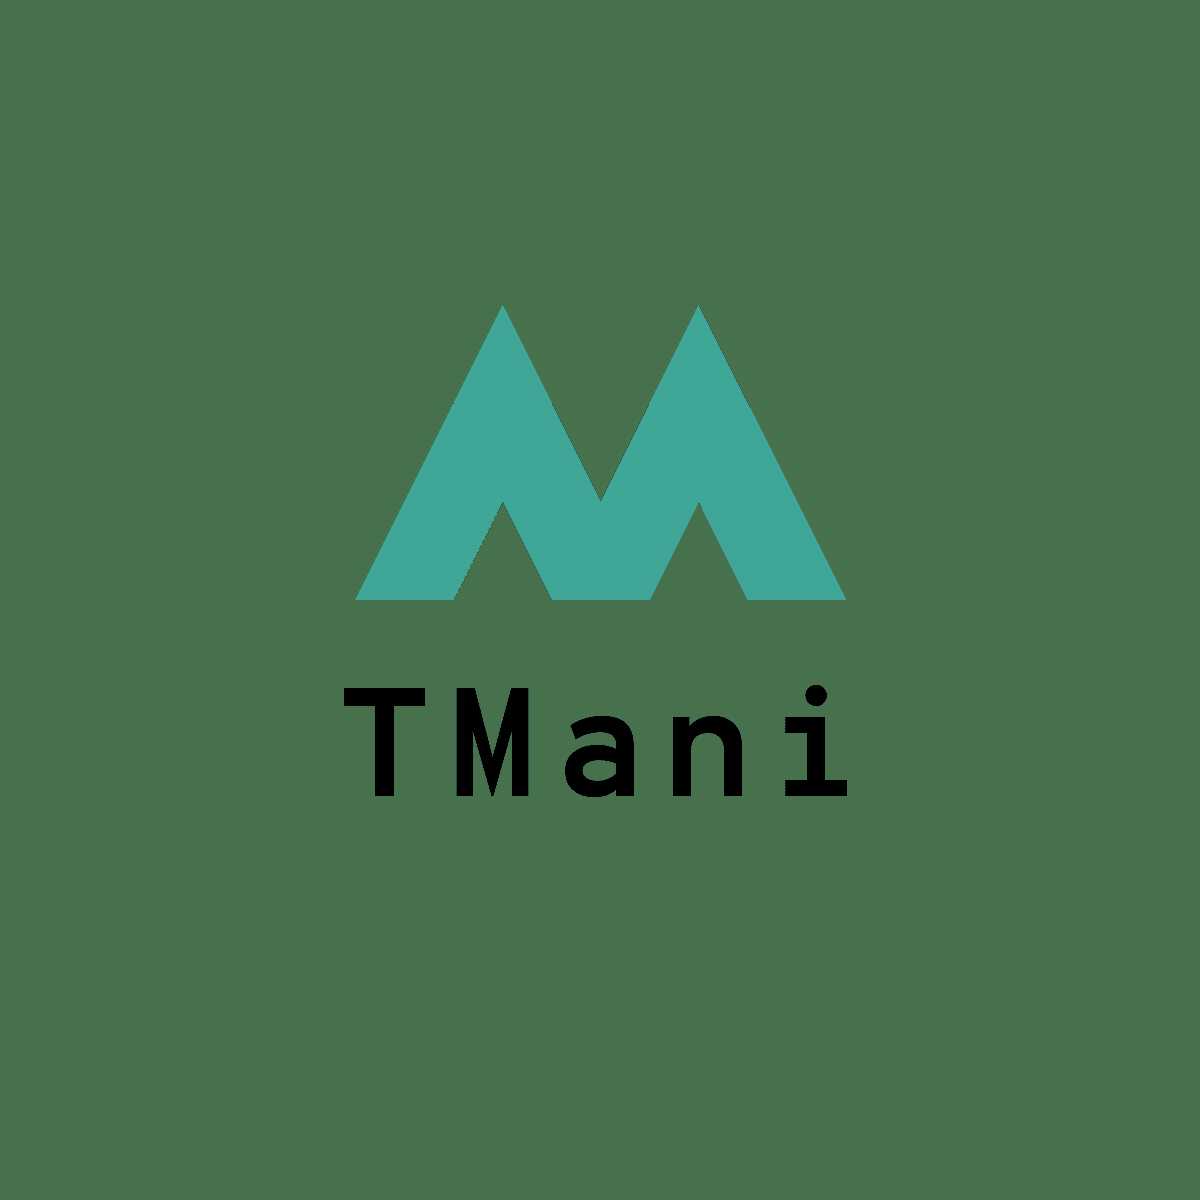 TMani Digital Services